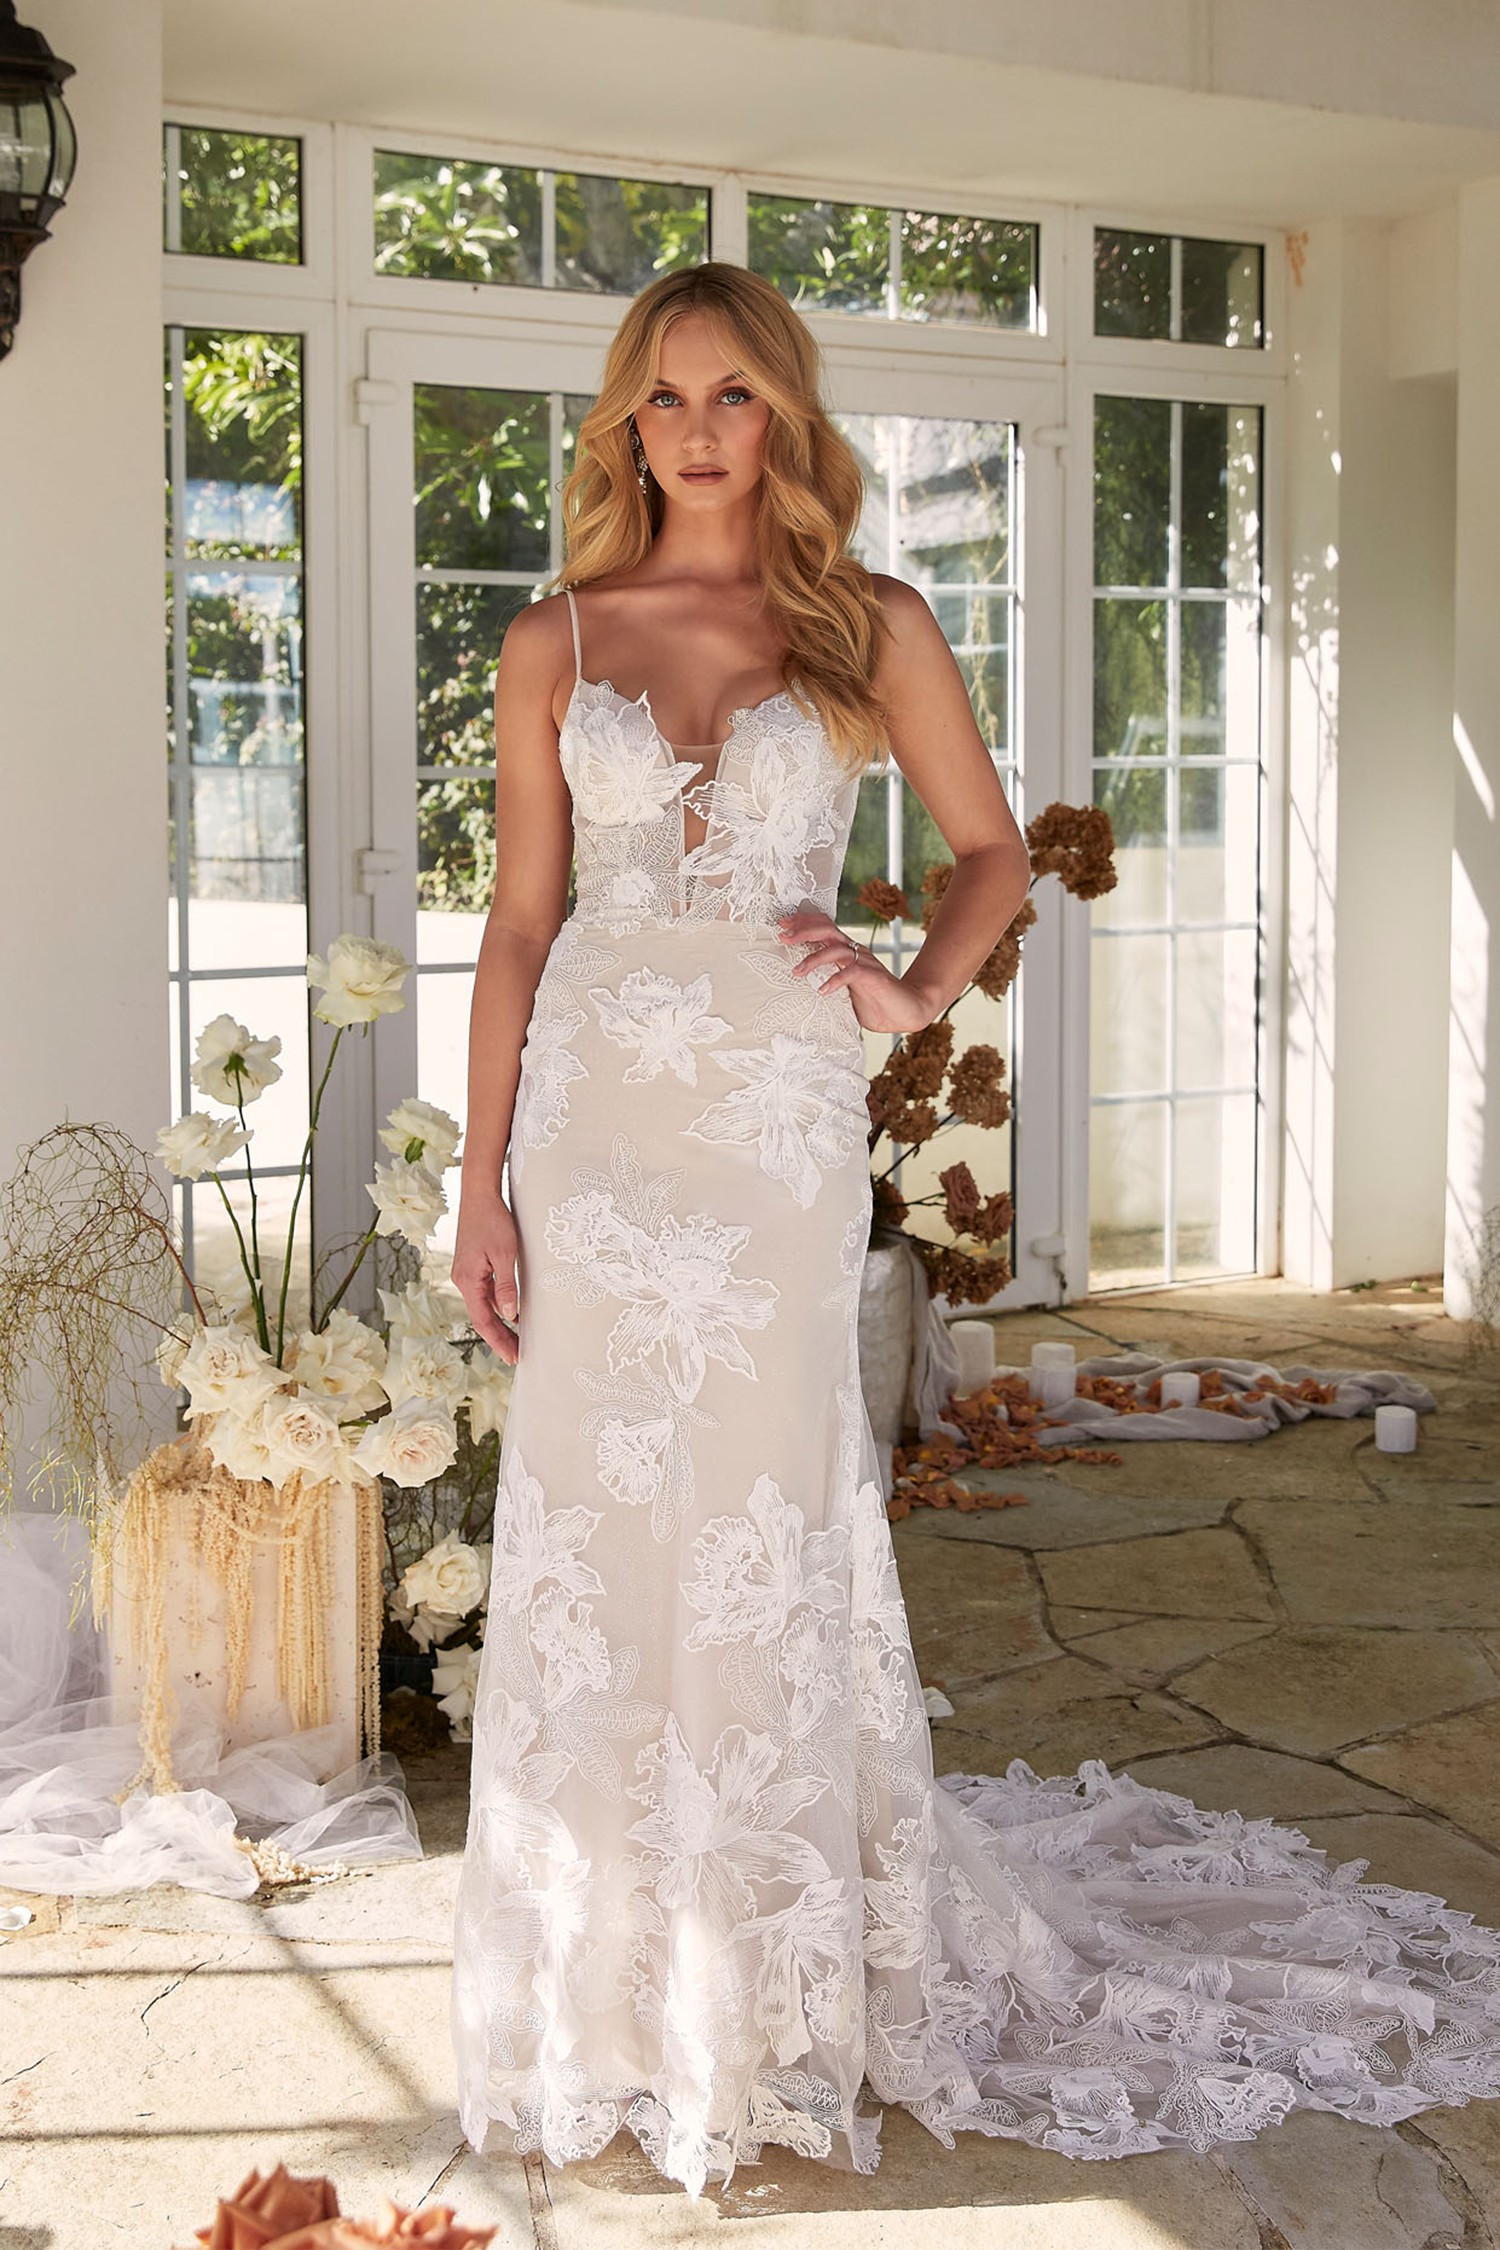 Bodice Bridal Veil Applique for Wedding Gown Exquisite Wedding Lace Applique Bridal Dress Decor